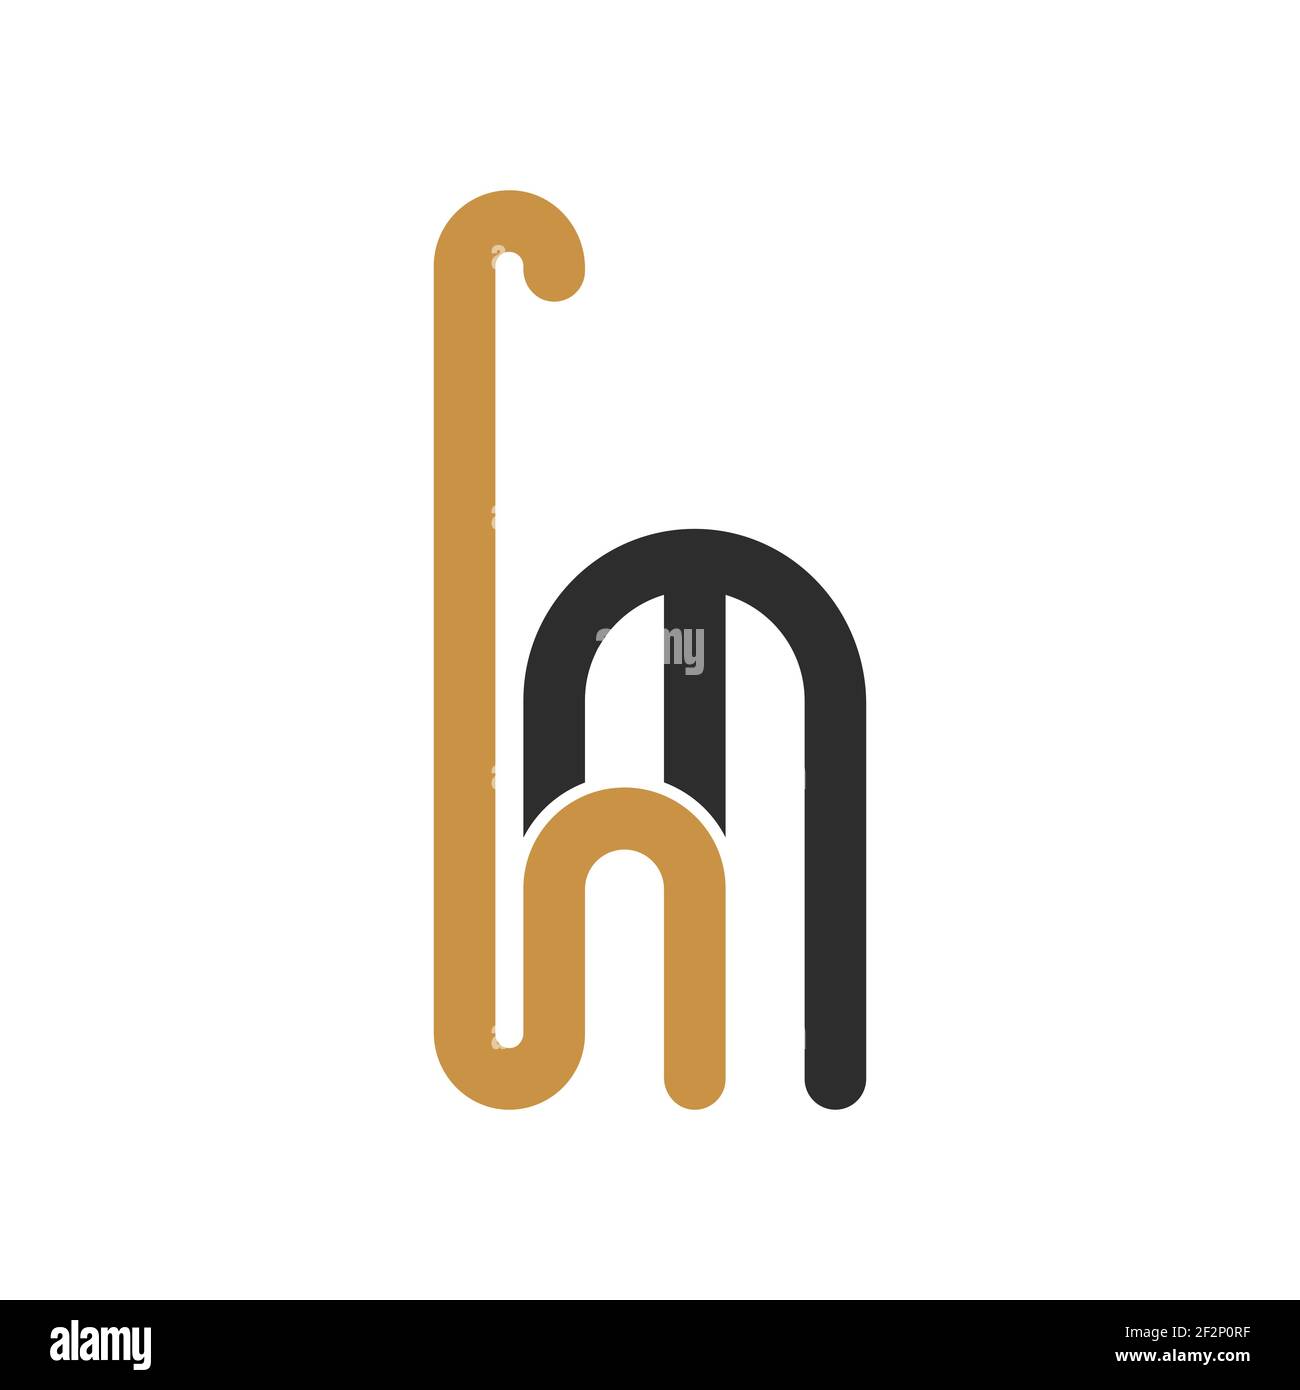 Creative abstract letter hm logo design. Linked letter mh logo design. Stock Vector